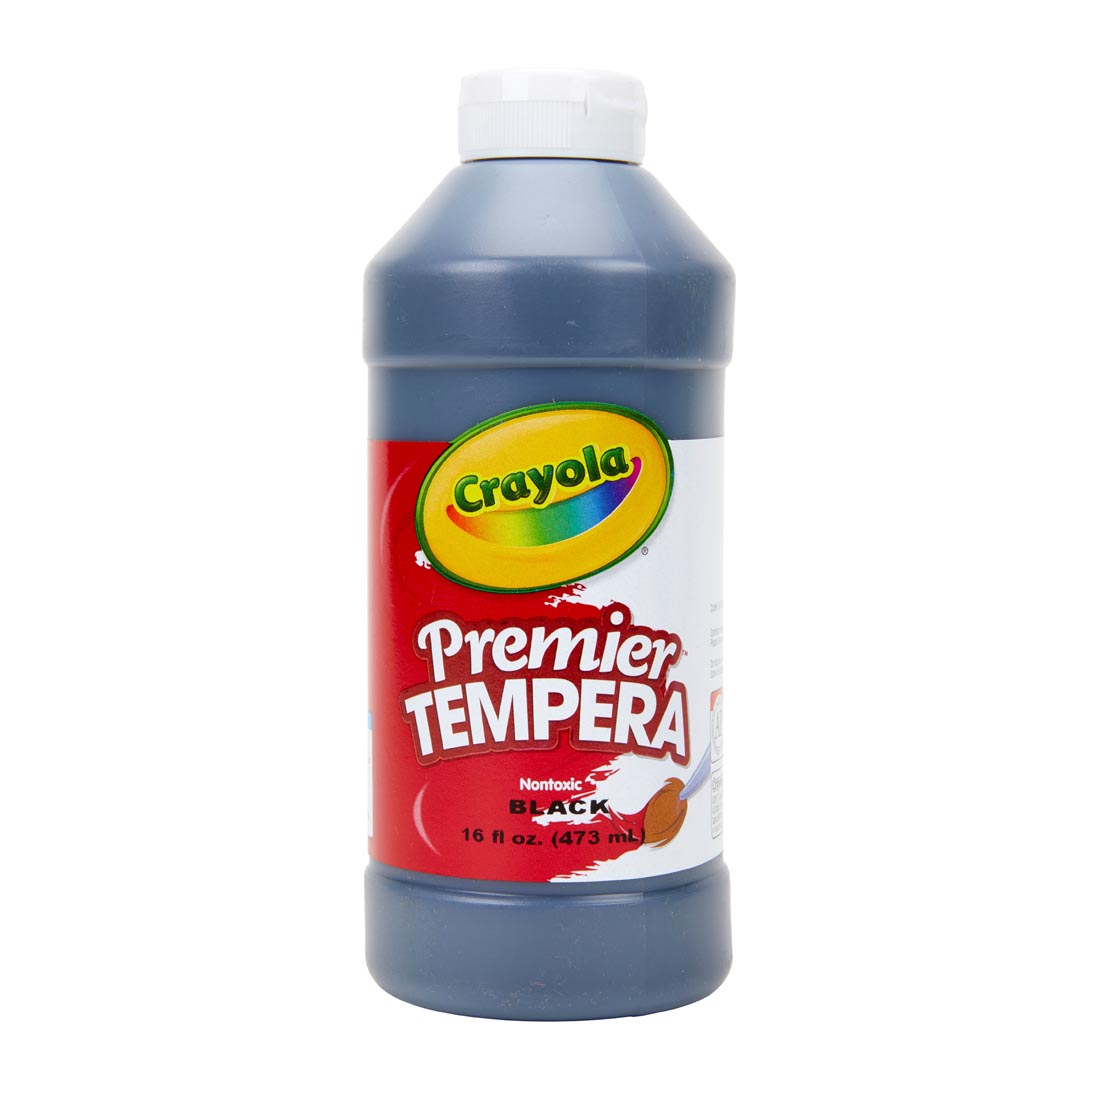 Bottle of Black Crayola Premier Tempera Paint